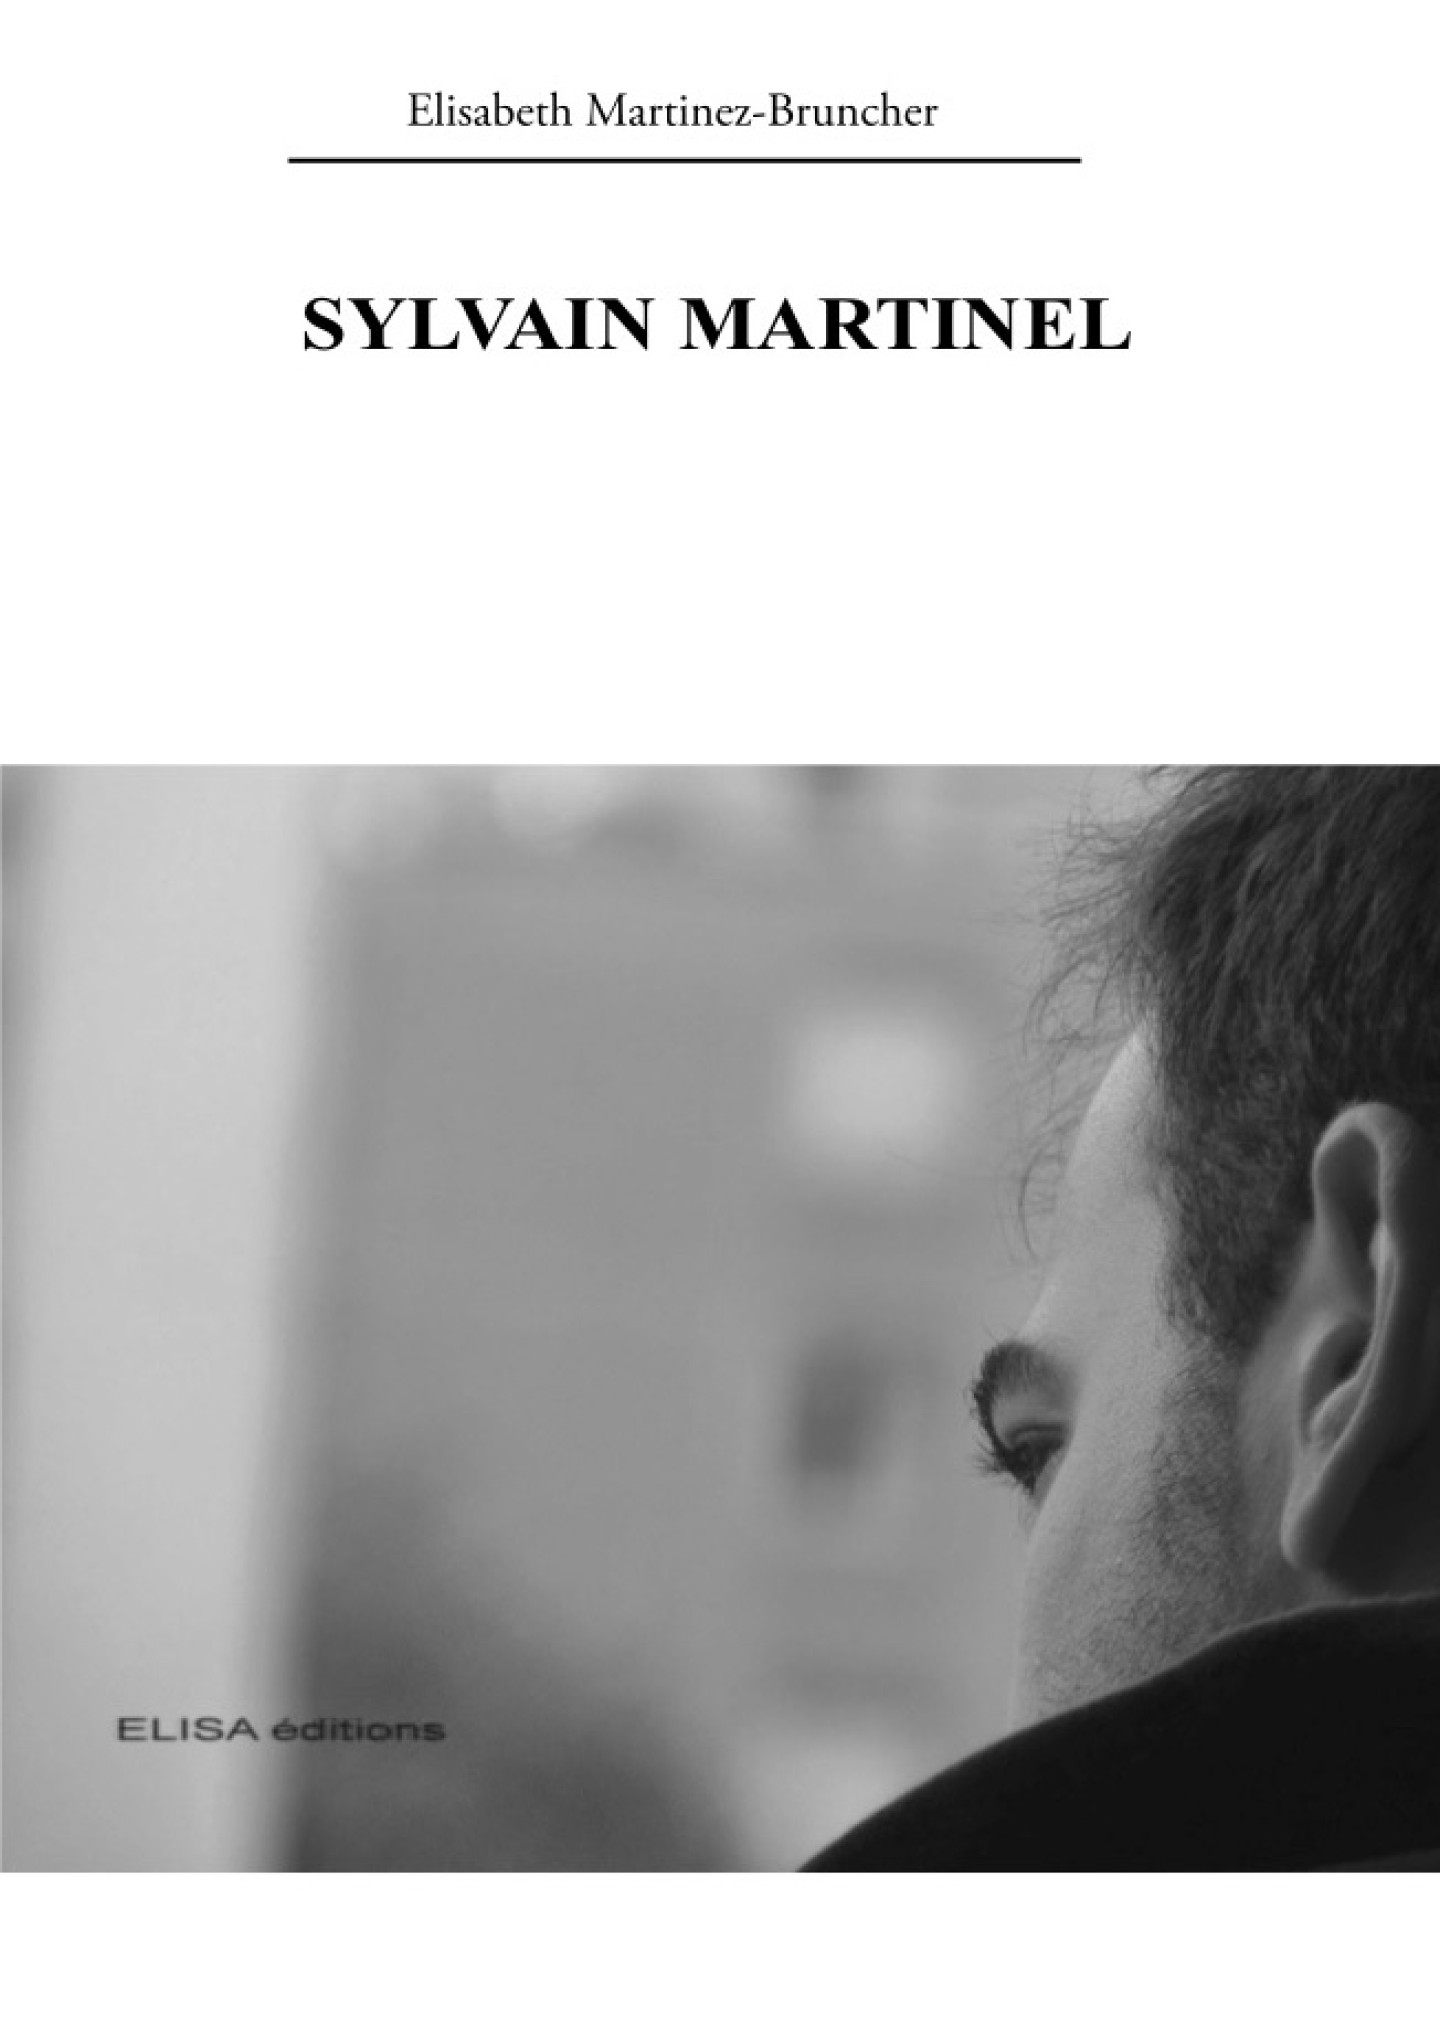 Sylvain Martinel d'Elisabeth Martinez-Bruncher